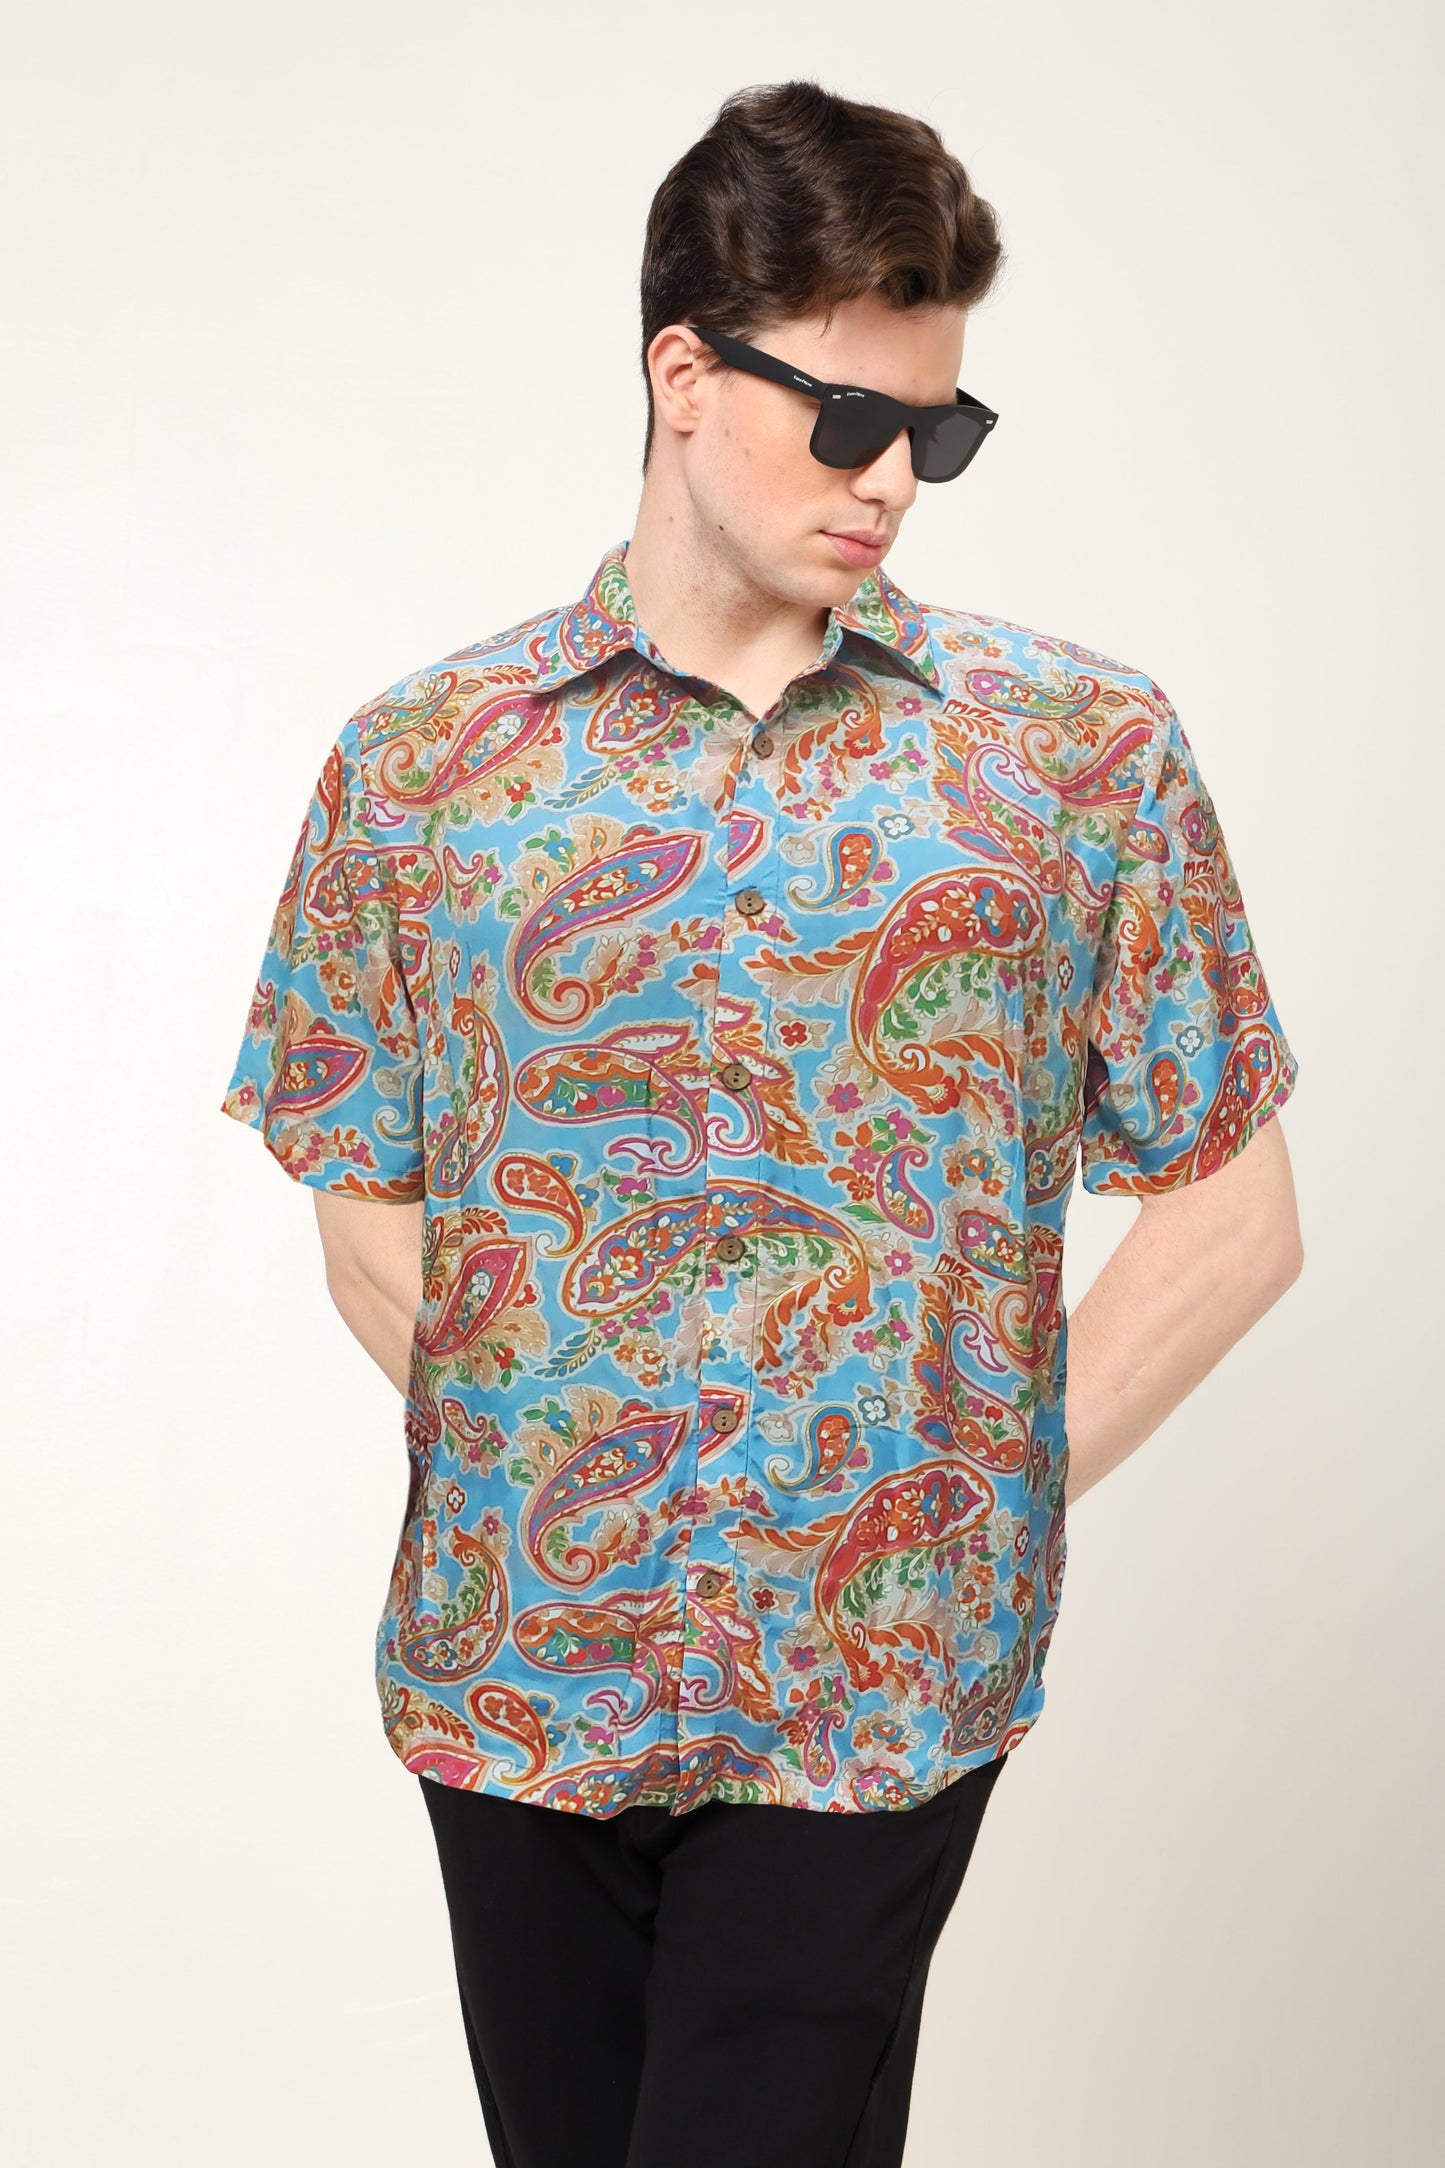 YASH GALLERY Men's Polyester Floral Printed Regular Shirt (Multi)